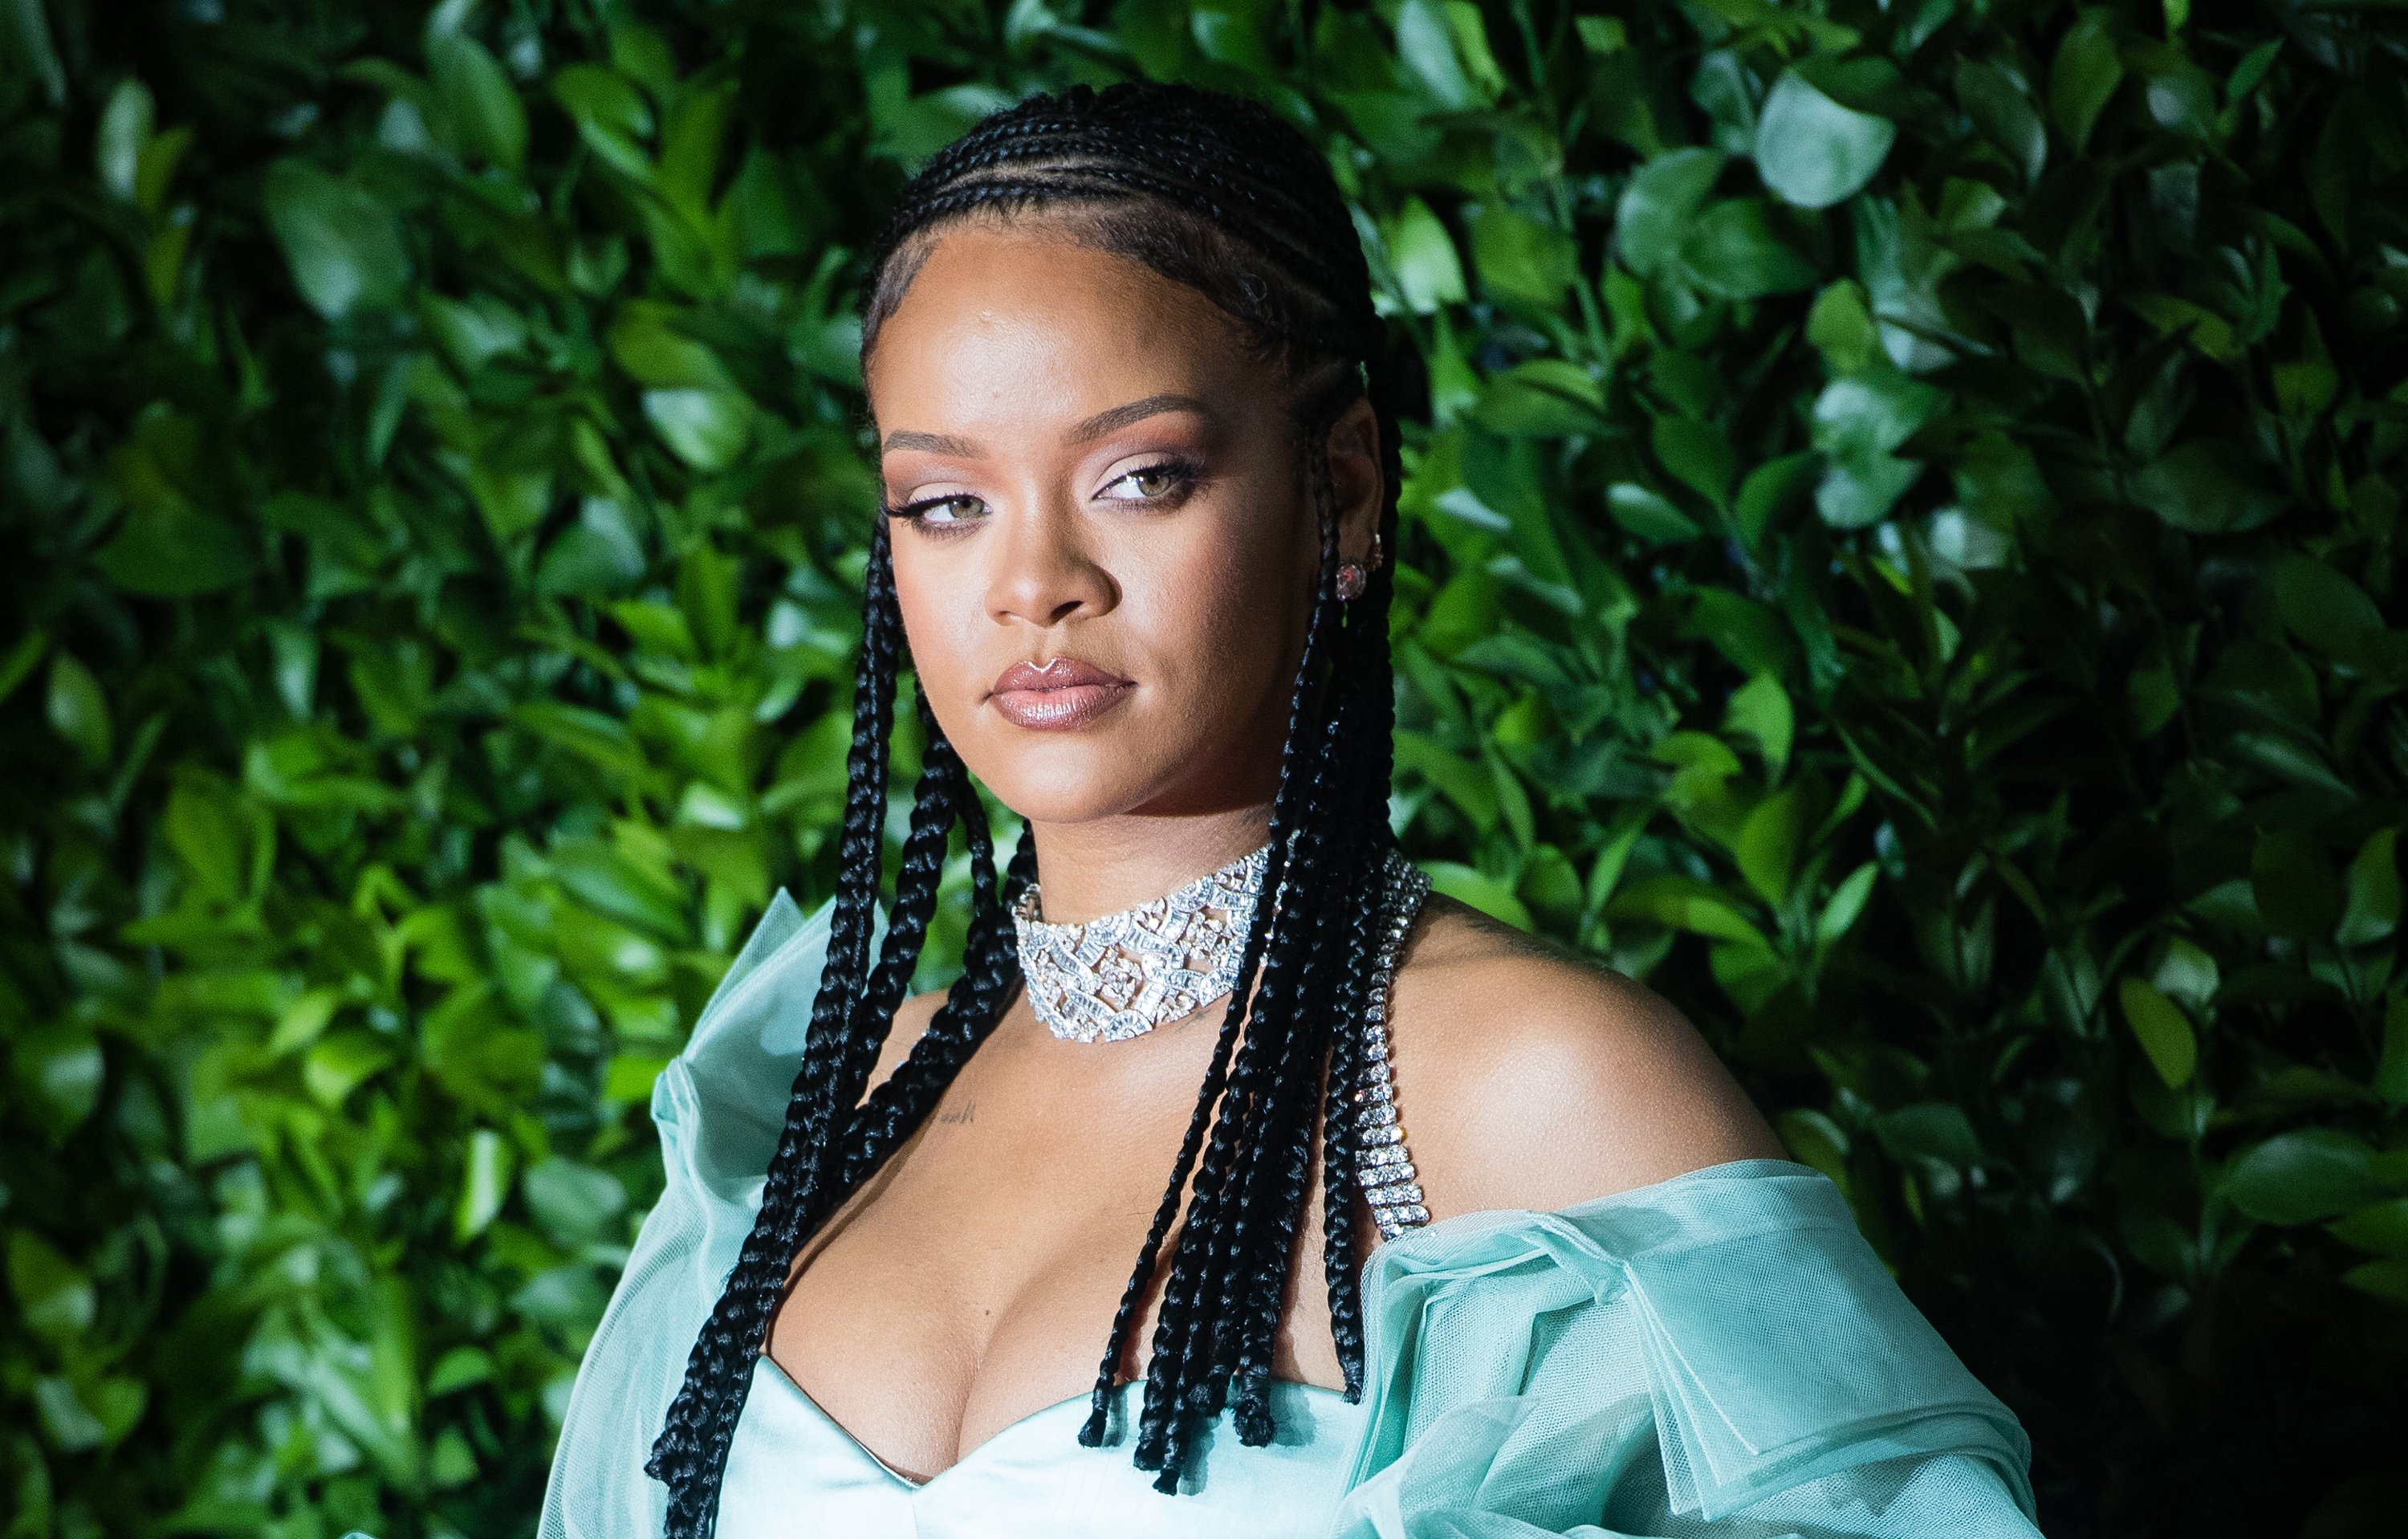 Rihanna wearing a necklace